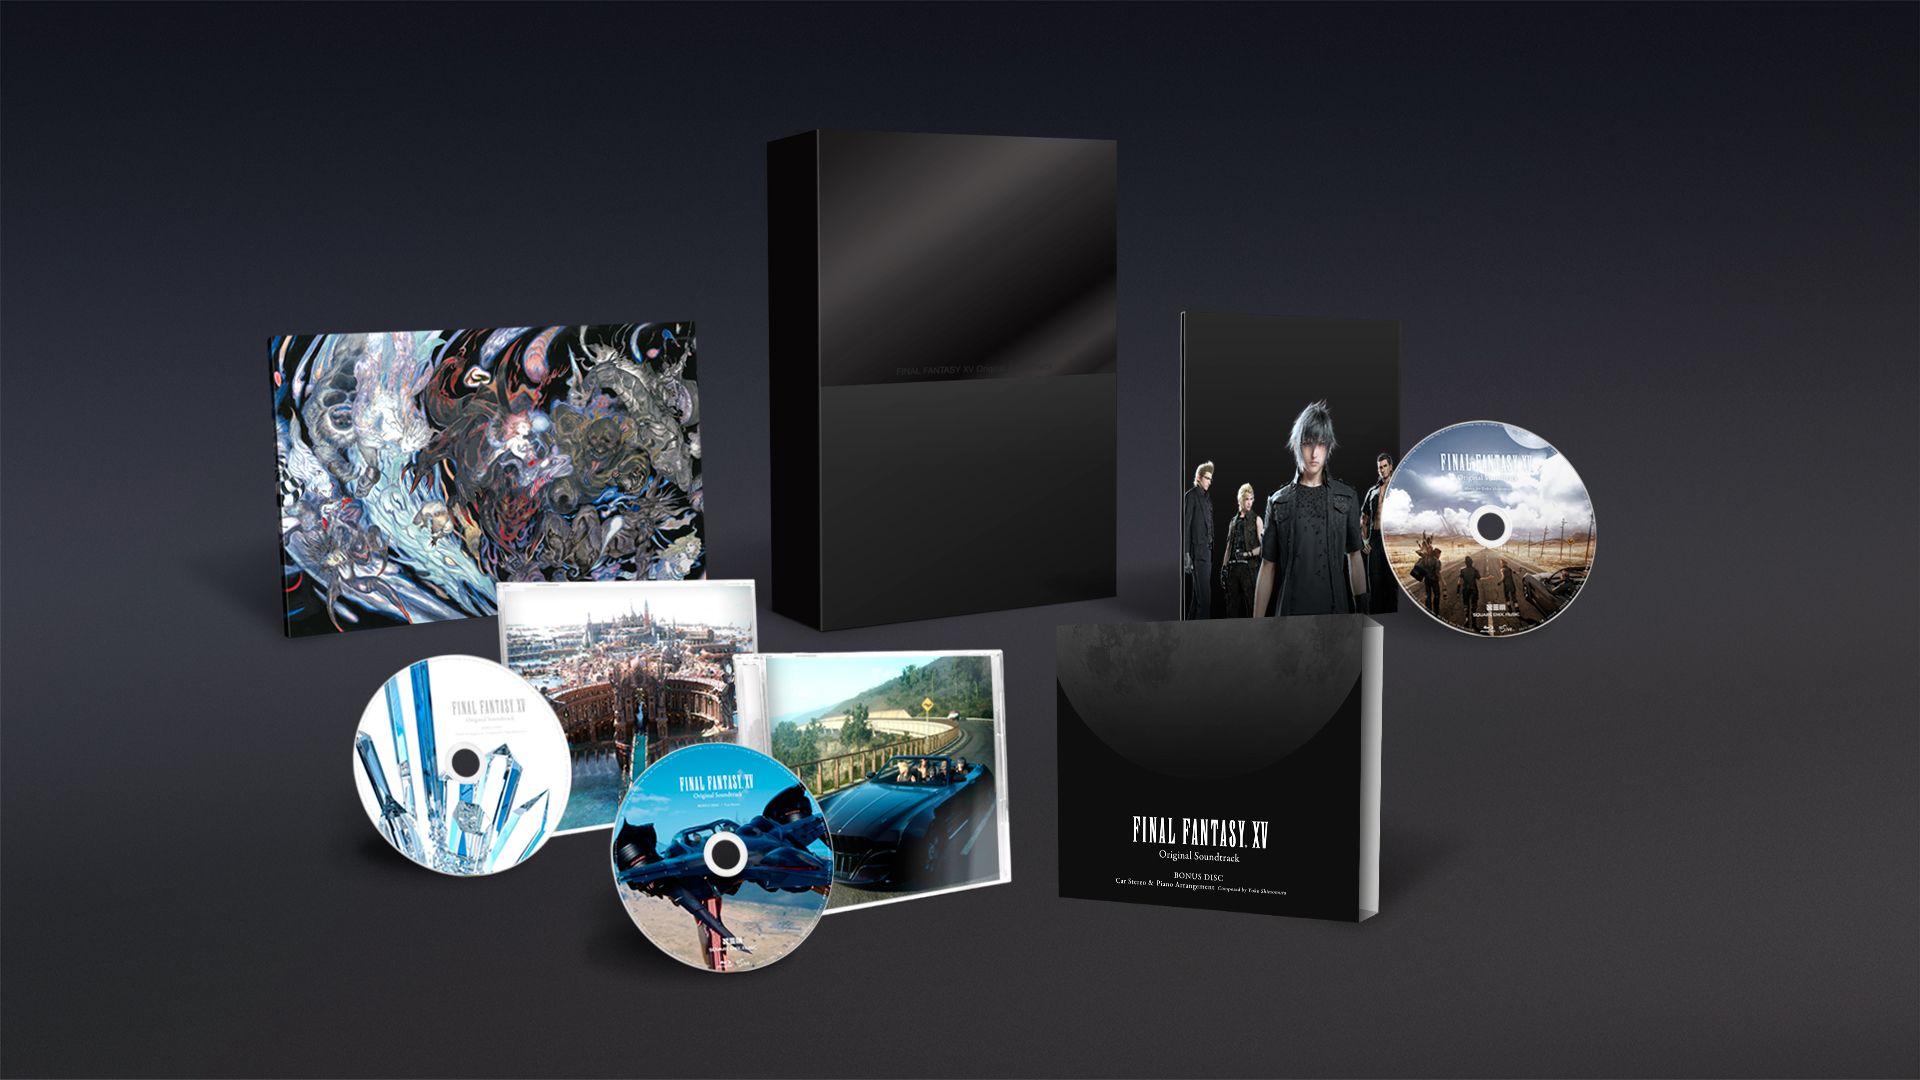 Final Fantasy Xv Original Soundtrack Limited Edition Blu Ray Disc Music Square Enix Store